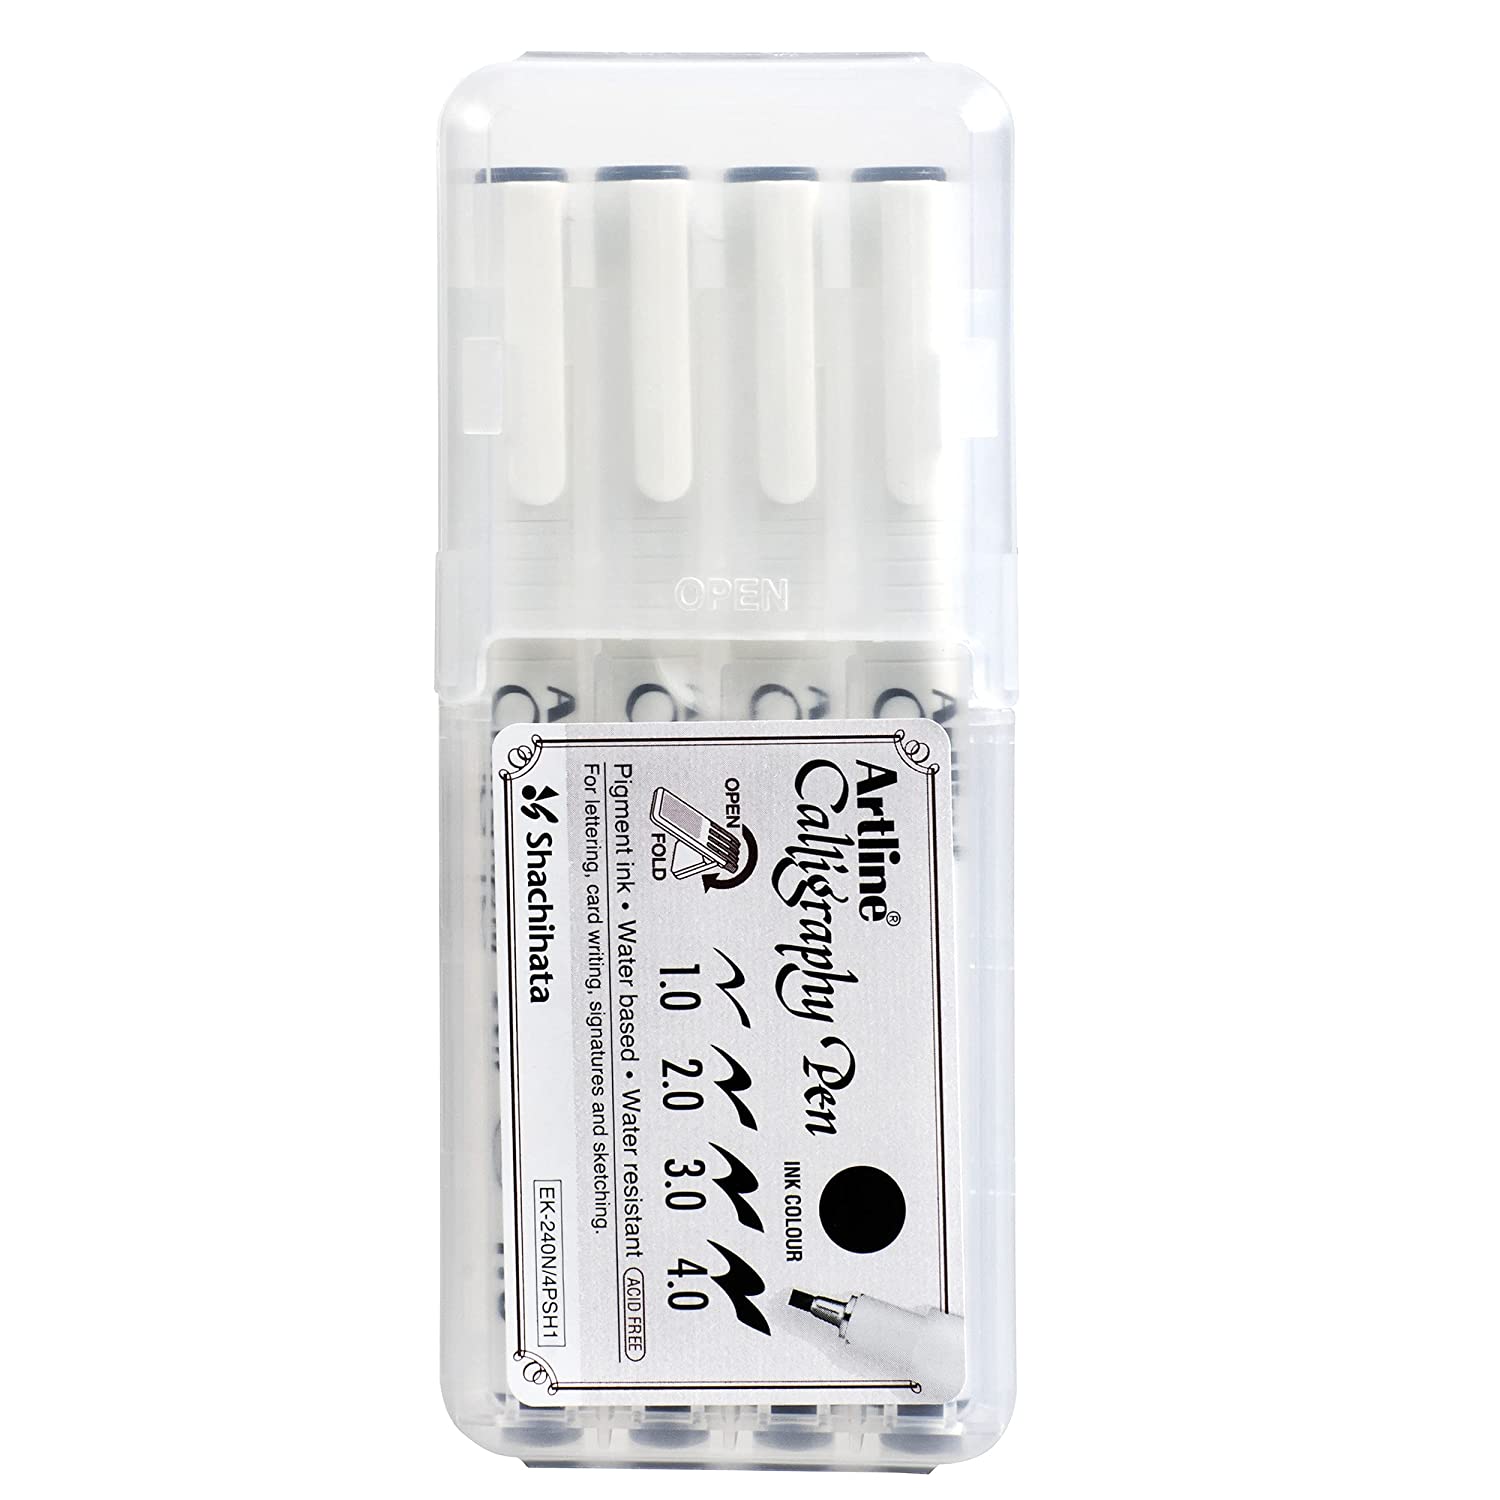 Artline Water Based Calligraphy Pen Set - Black - Pack Of 4